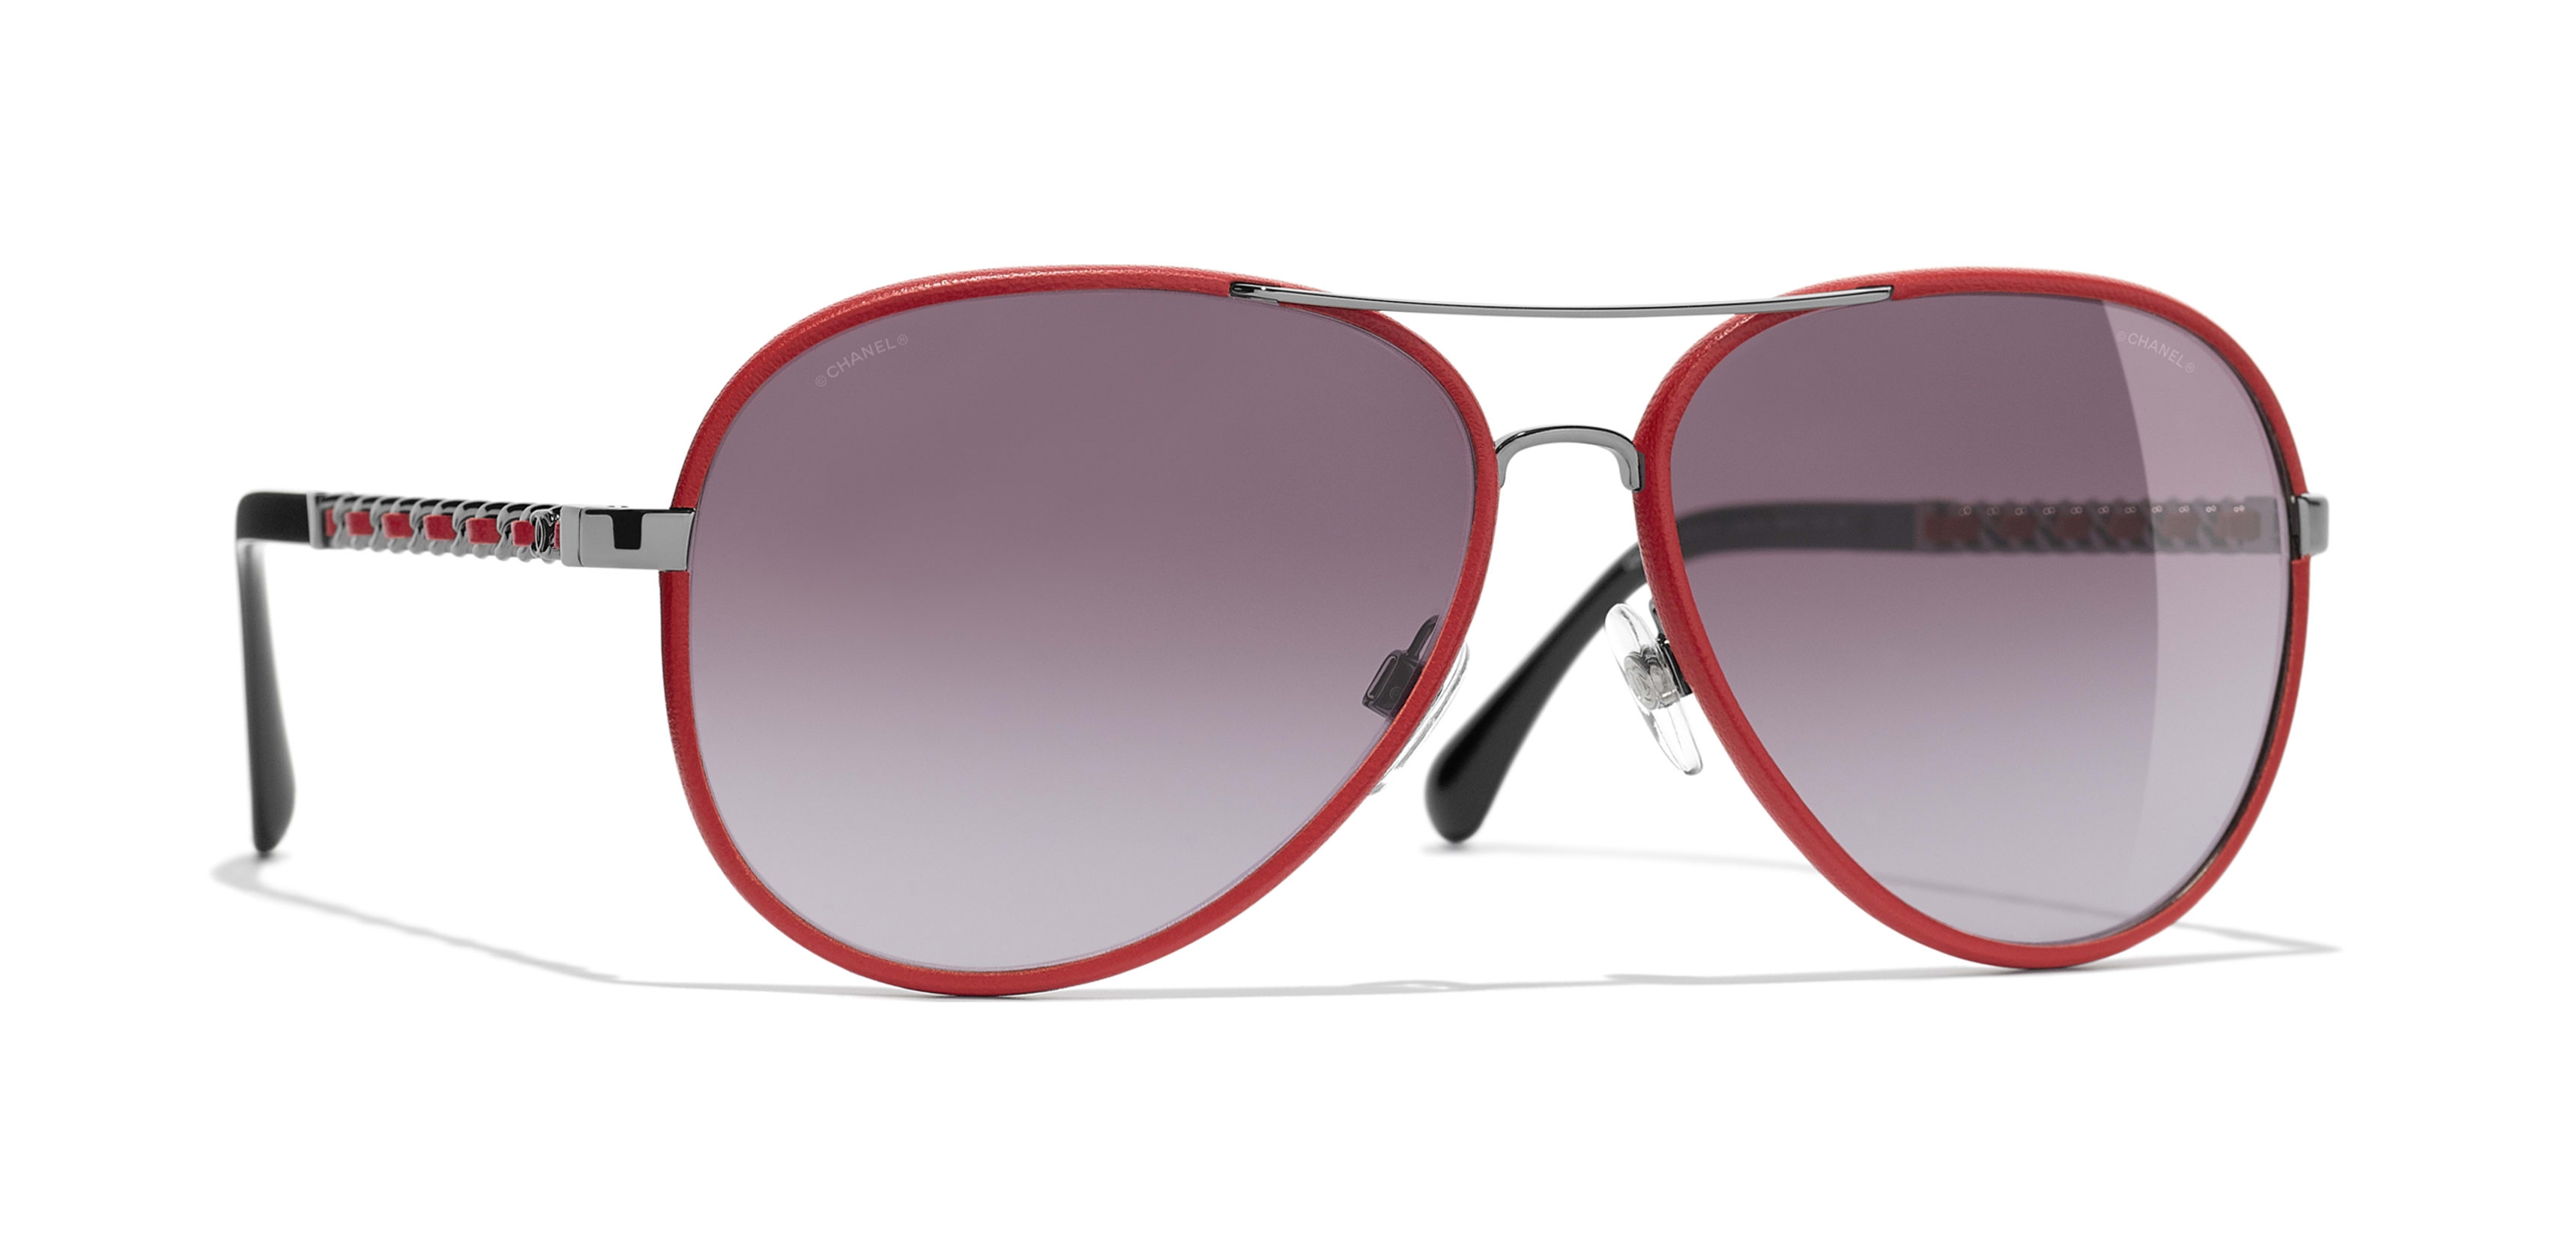 Pilot Sunglasses - Dark Silver Red - Chanel Eyewear - Avvenice